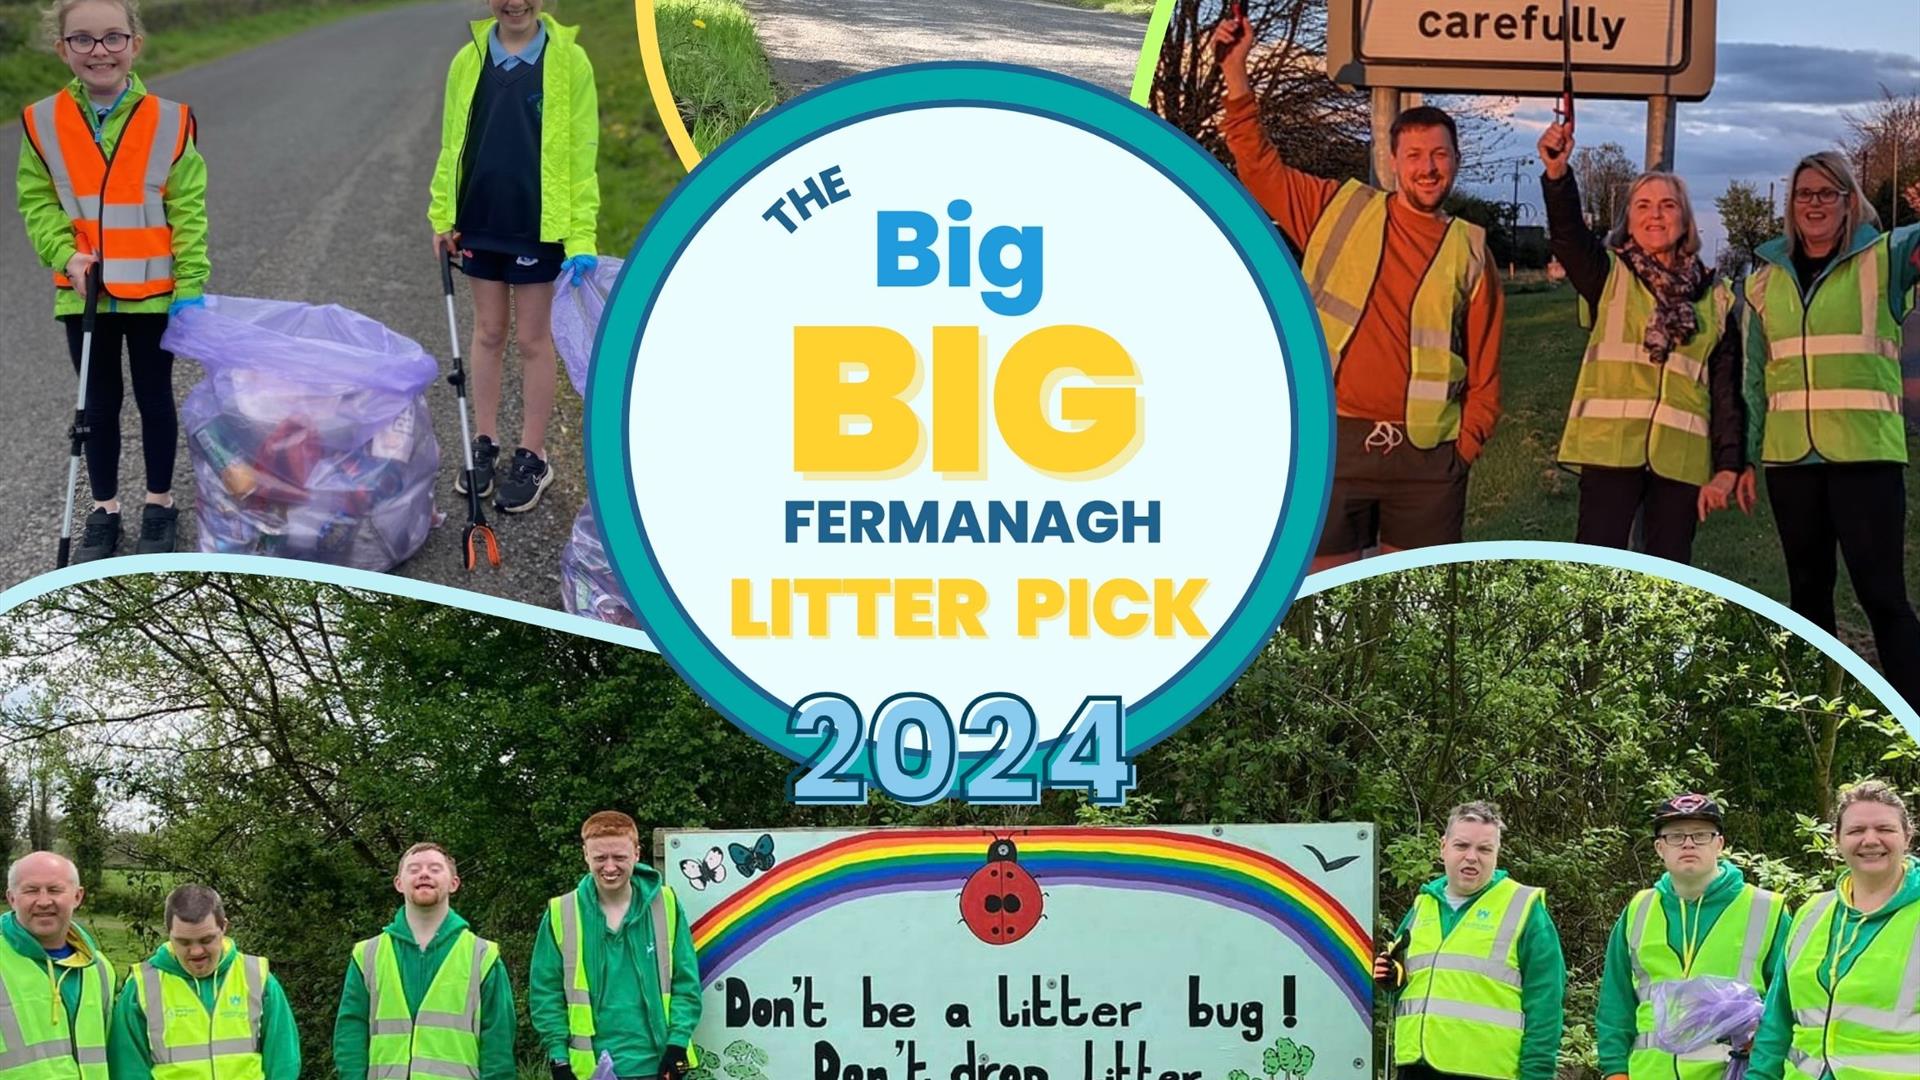 The Big BIG Fermanagh Litter Pick 2024 Poster